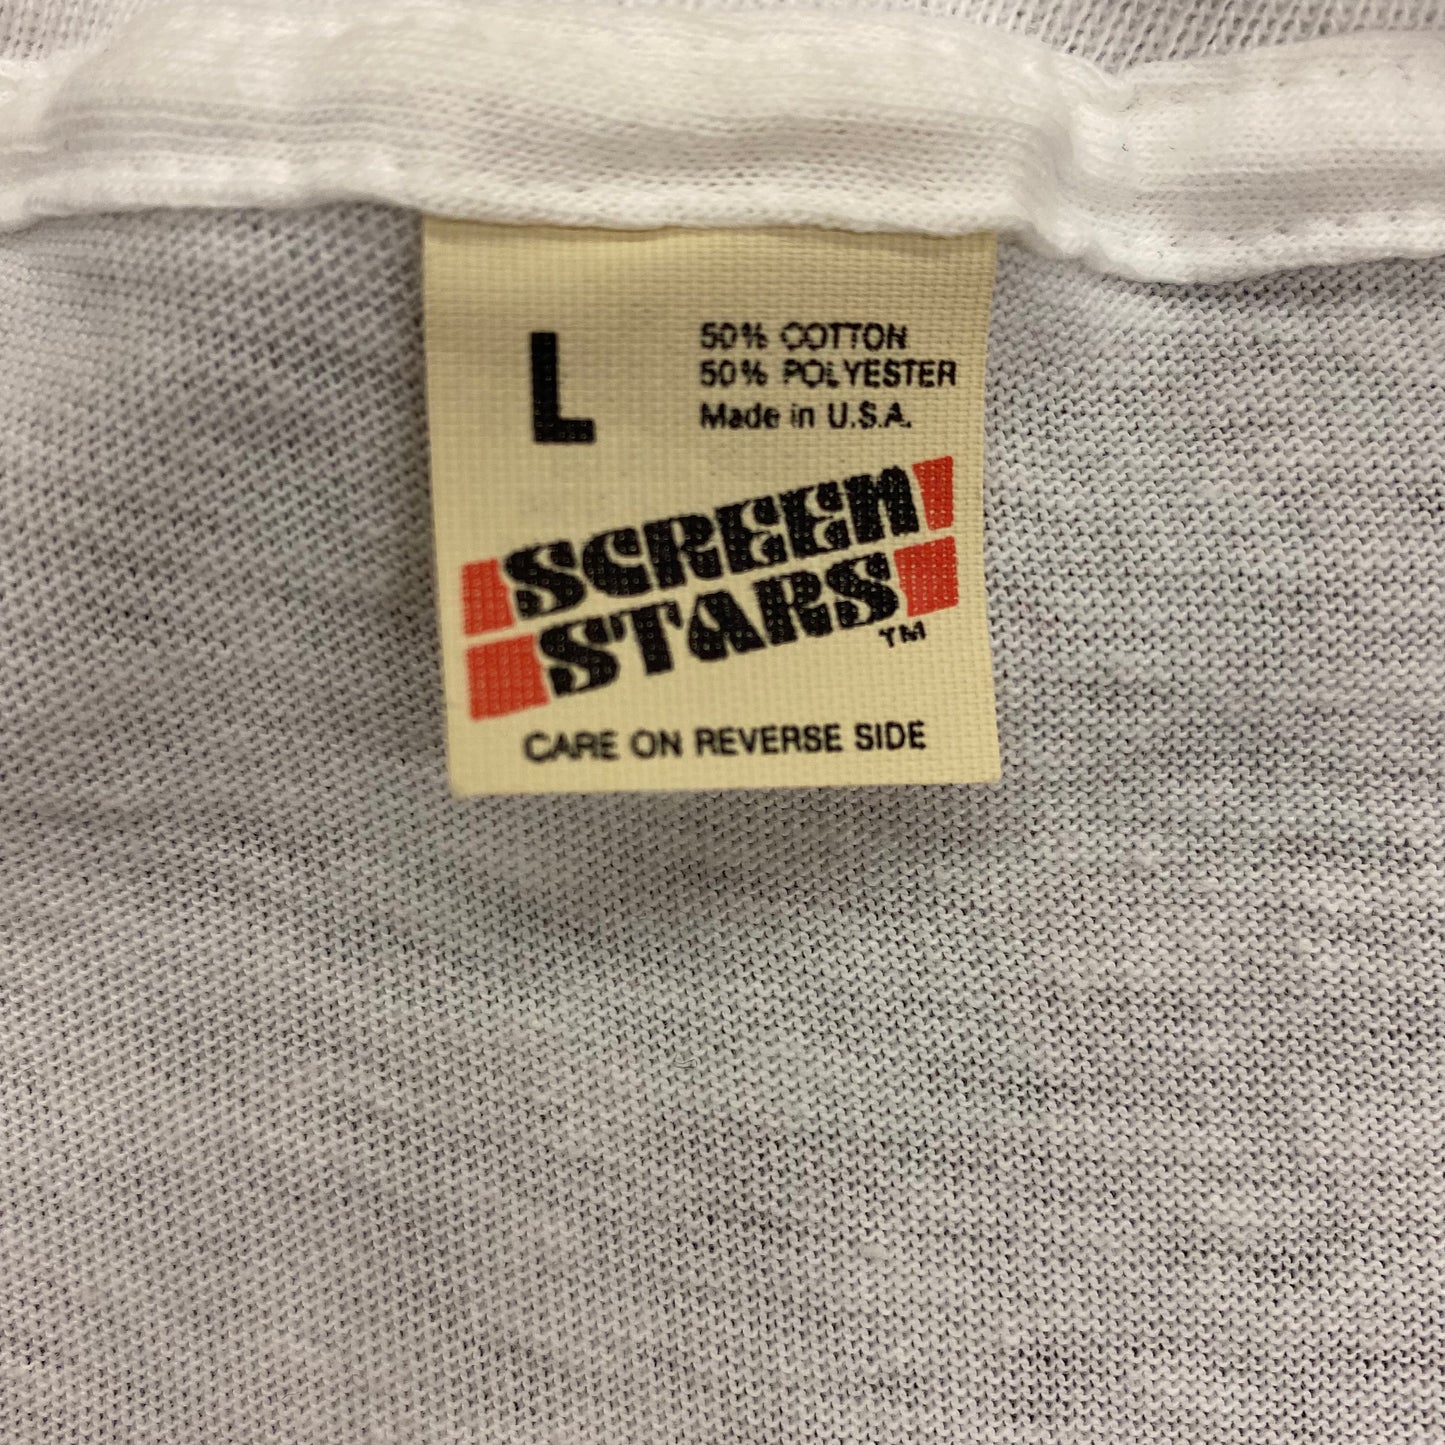 1983 St. Luke’s Hospital George Sheehan Run Promo T-Shirt - Size Large